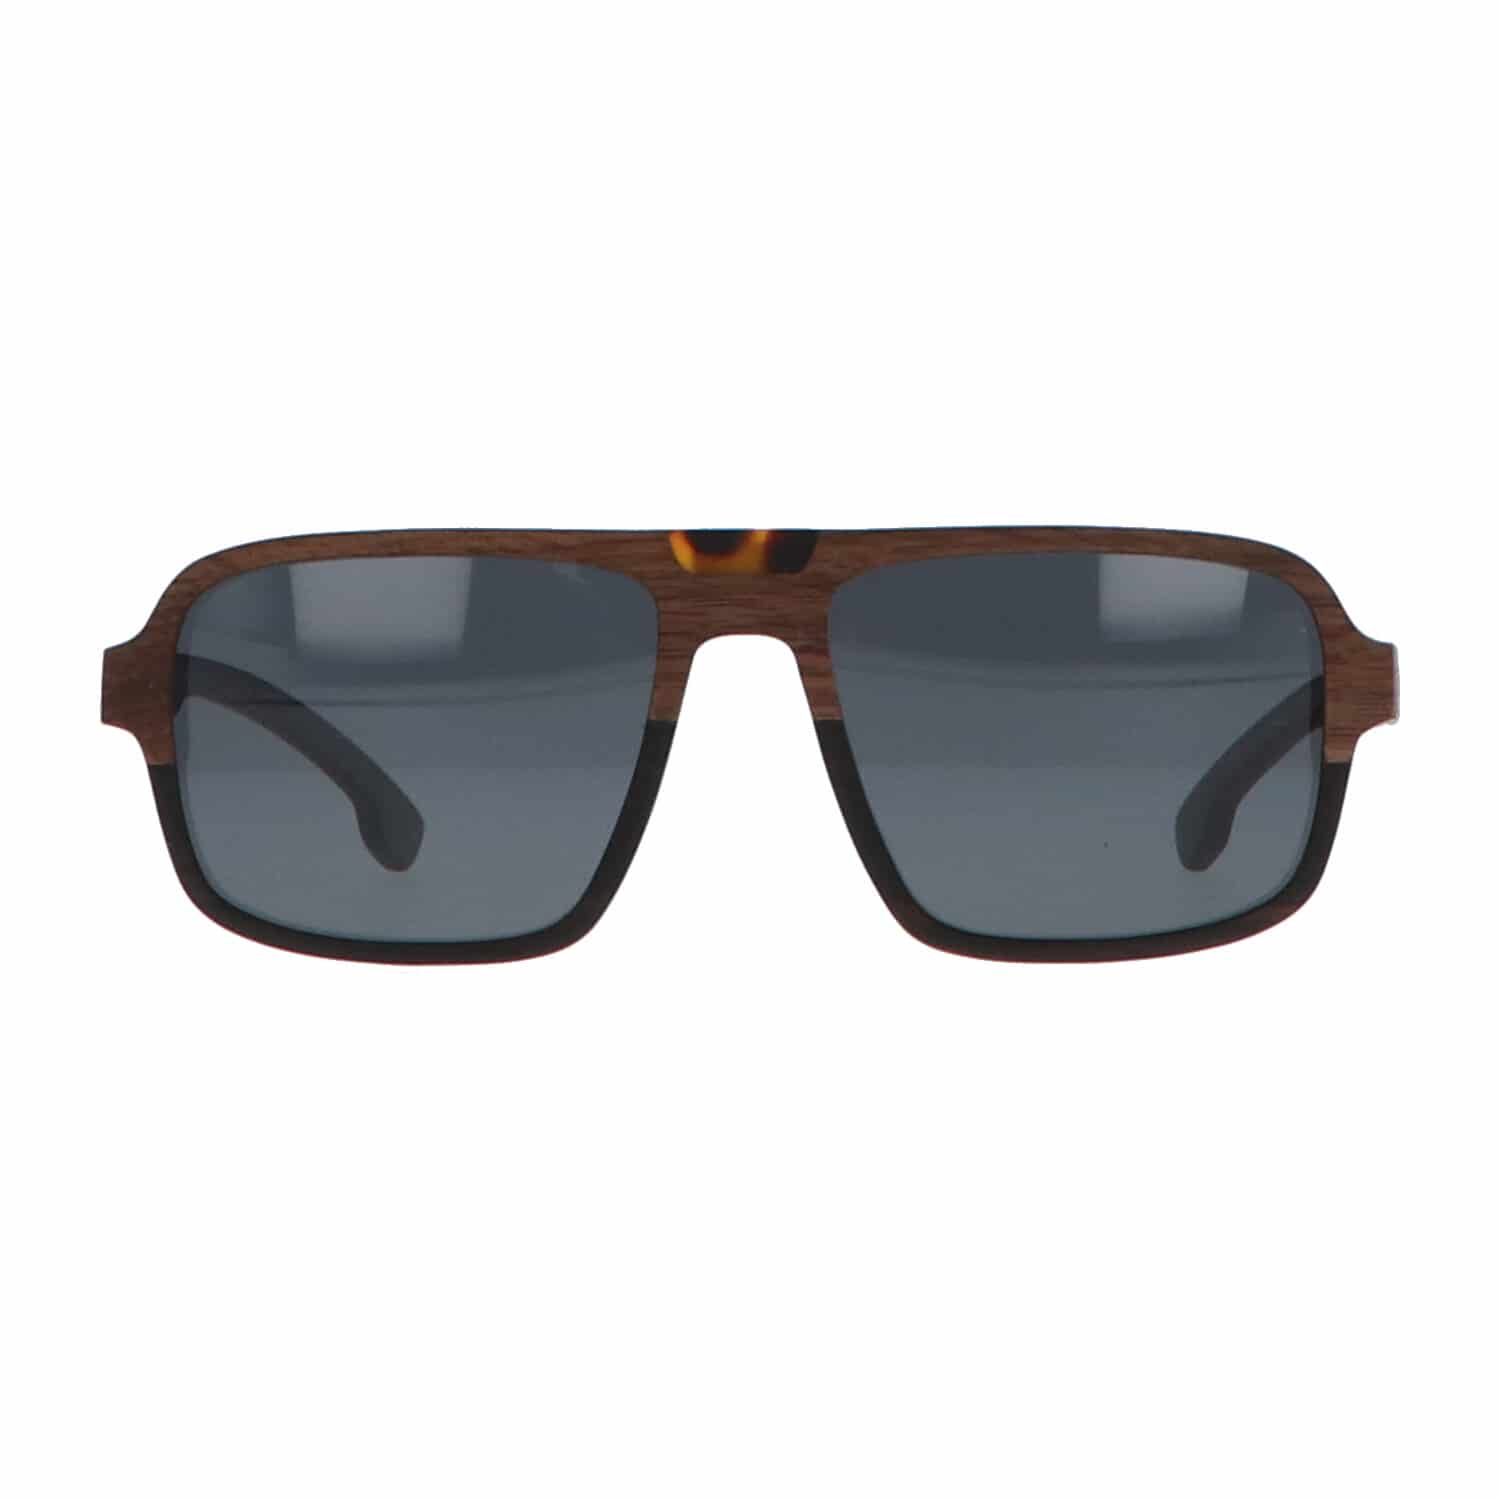 5one® Aviator Walnut Square - walnoot houten zonnebril - grijze lens